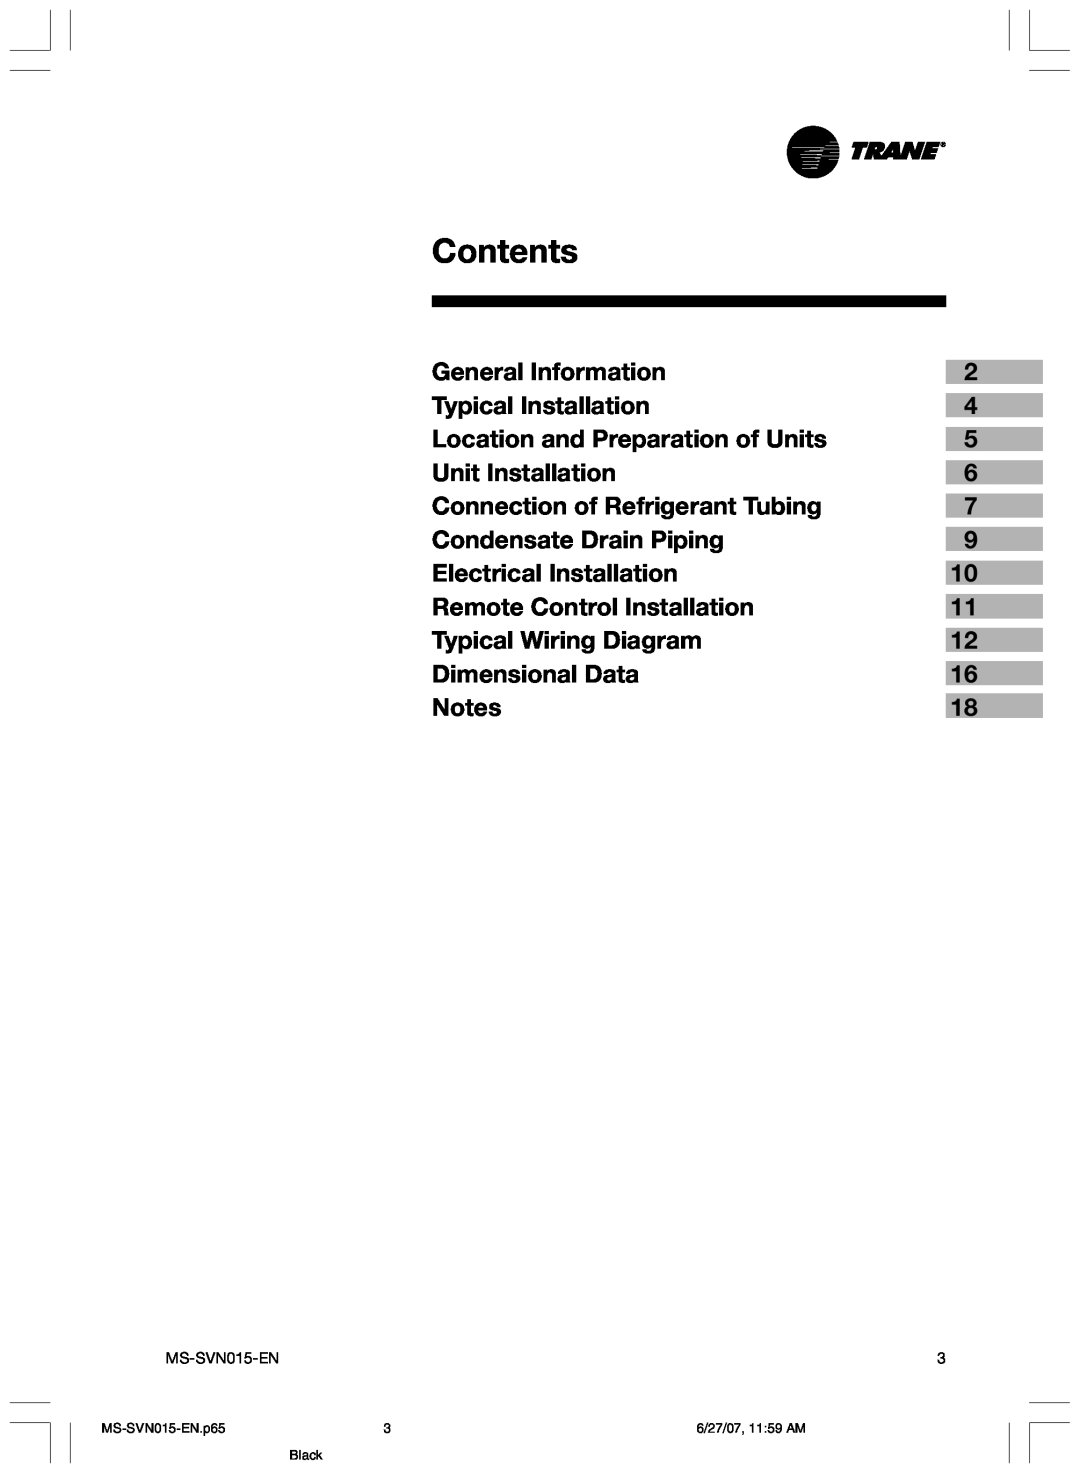 Trane MS-SVN015-EN installation manual Contents 